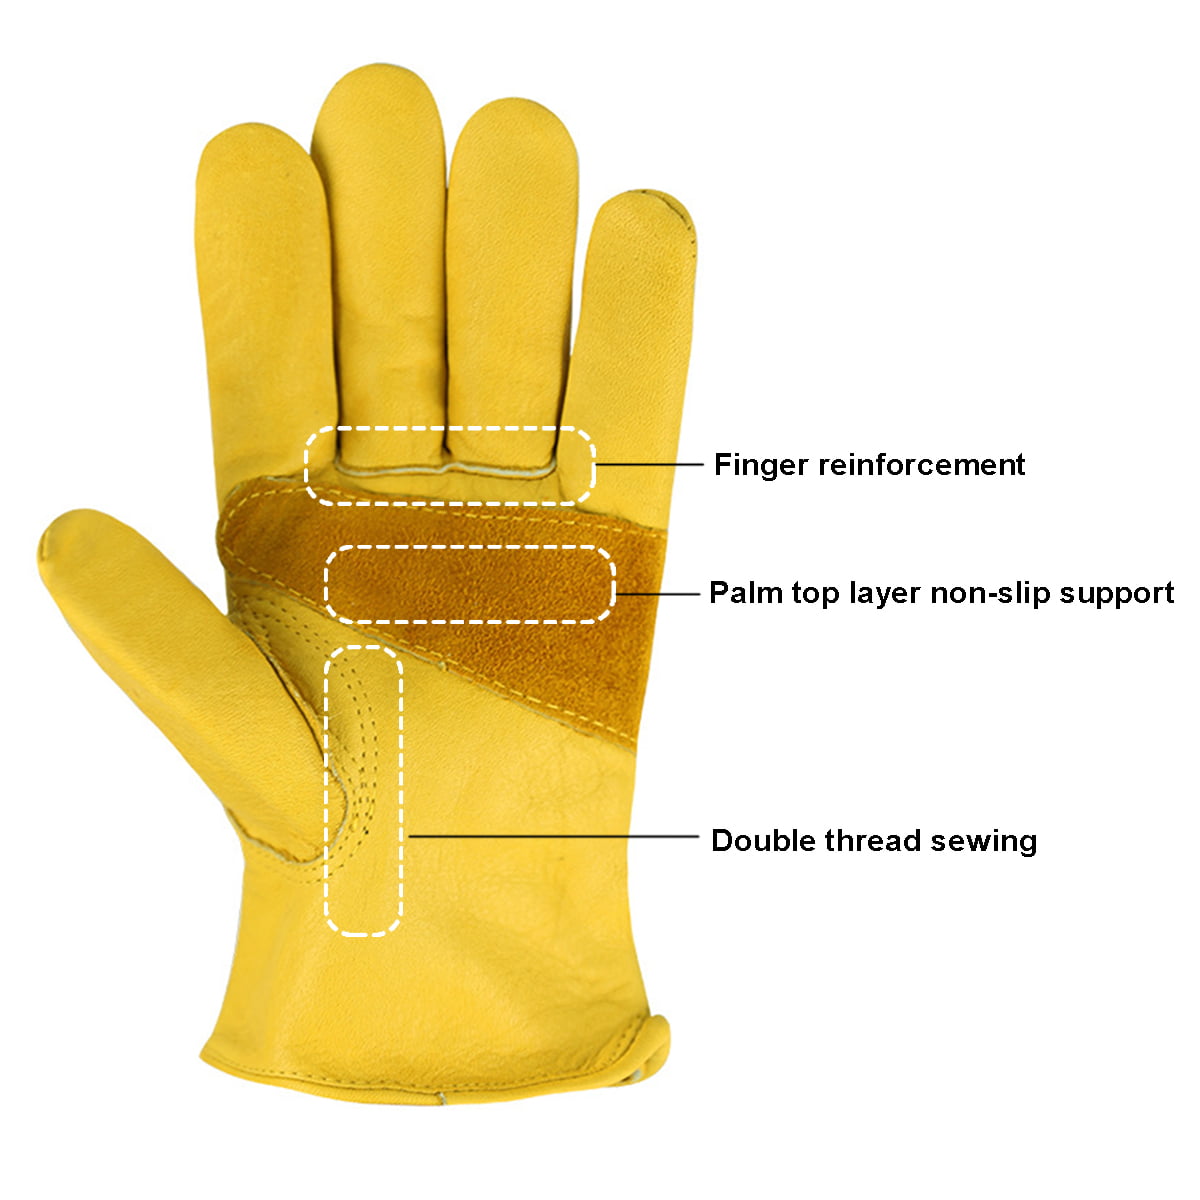 2 Pairs Heavy Duty Gardening Gloves Men Women Thorn Proof Leather Work UK 